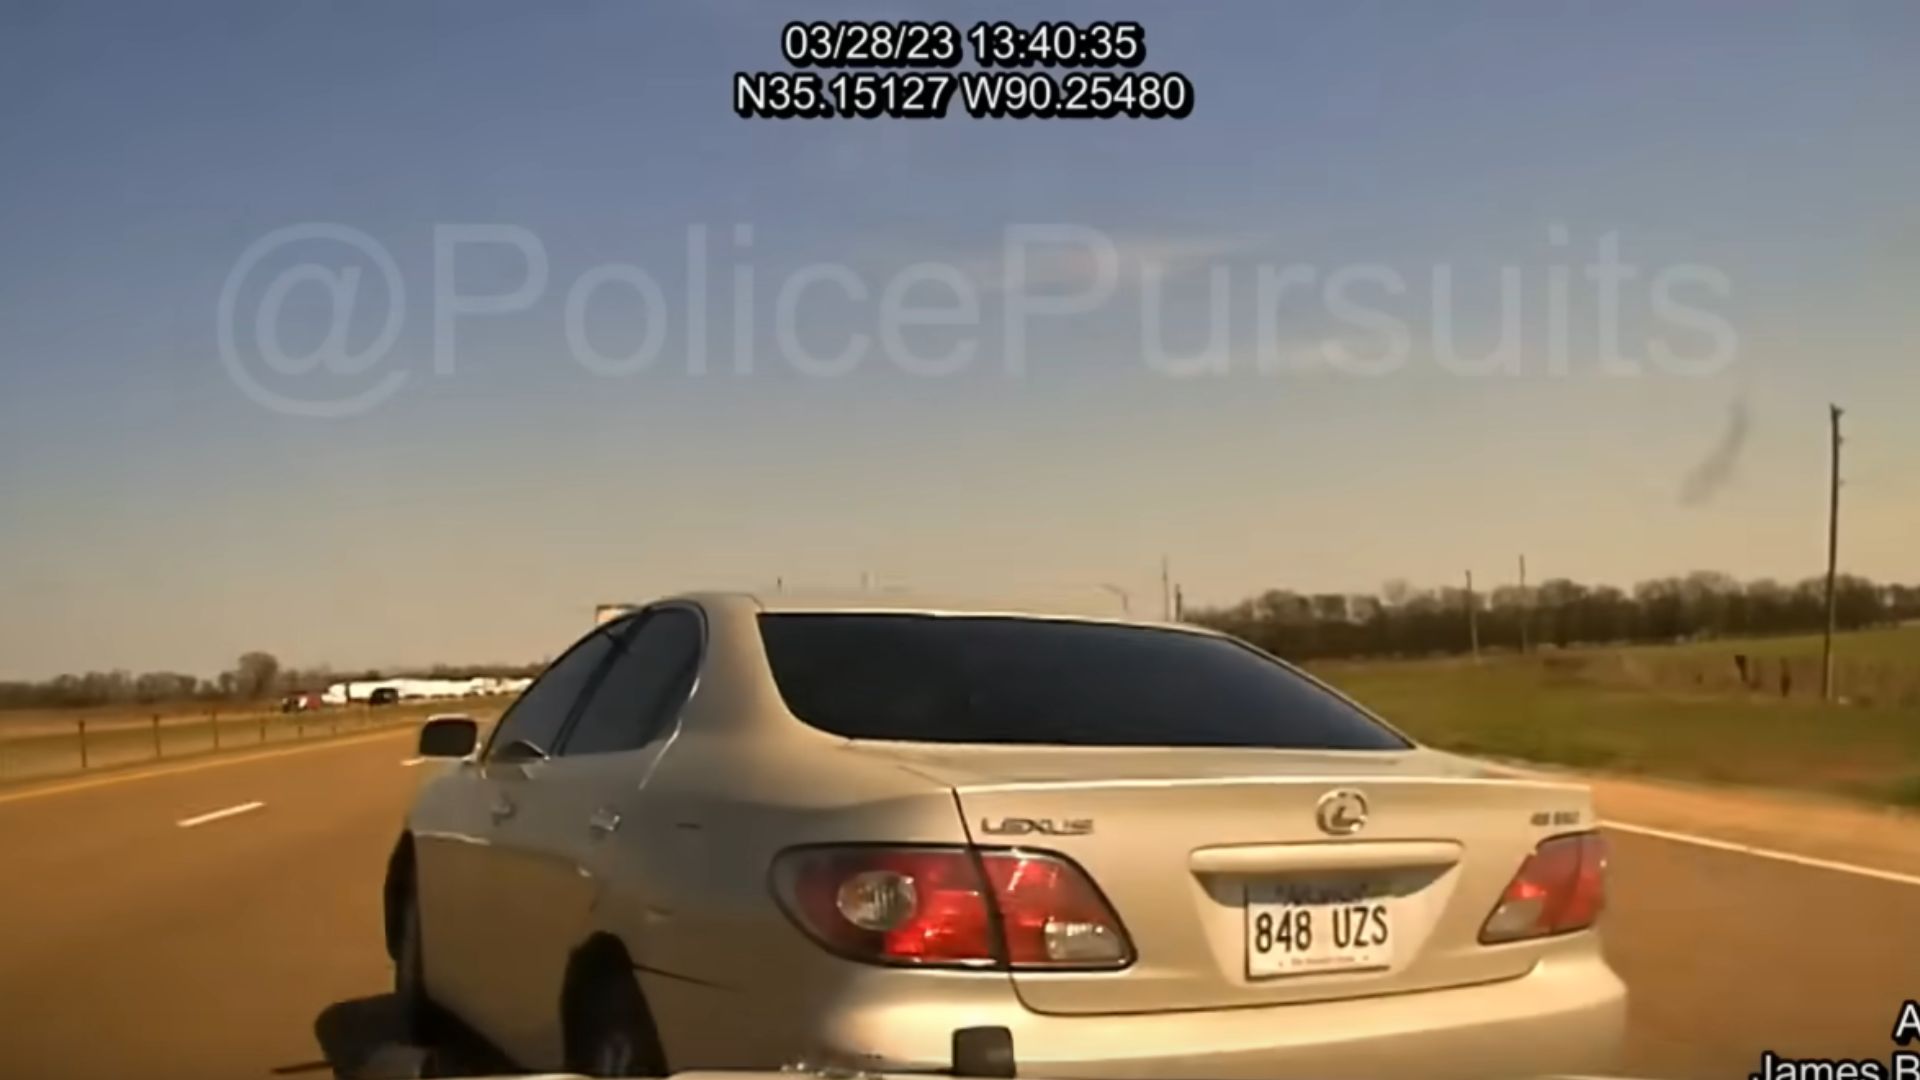 High Speed PIT Maneuver Flips Suspect’s Car